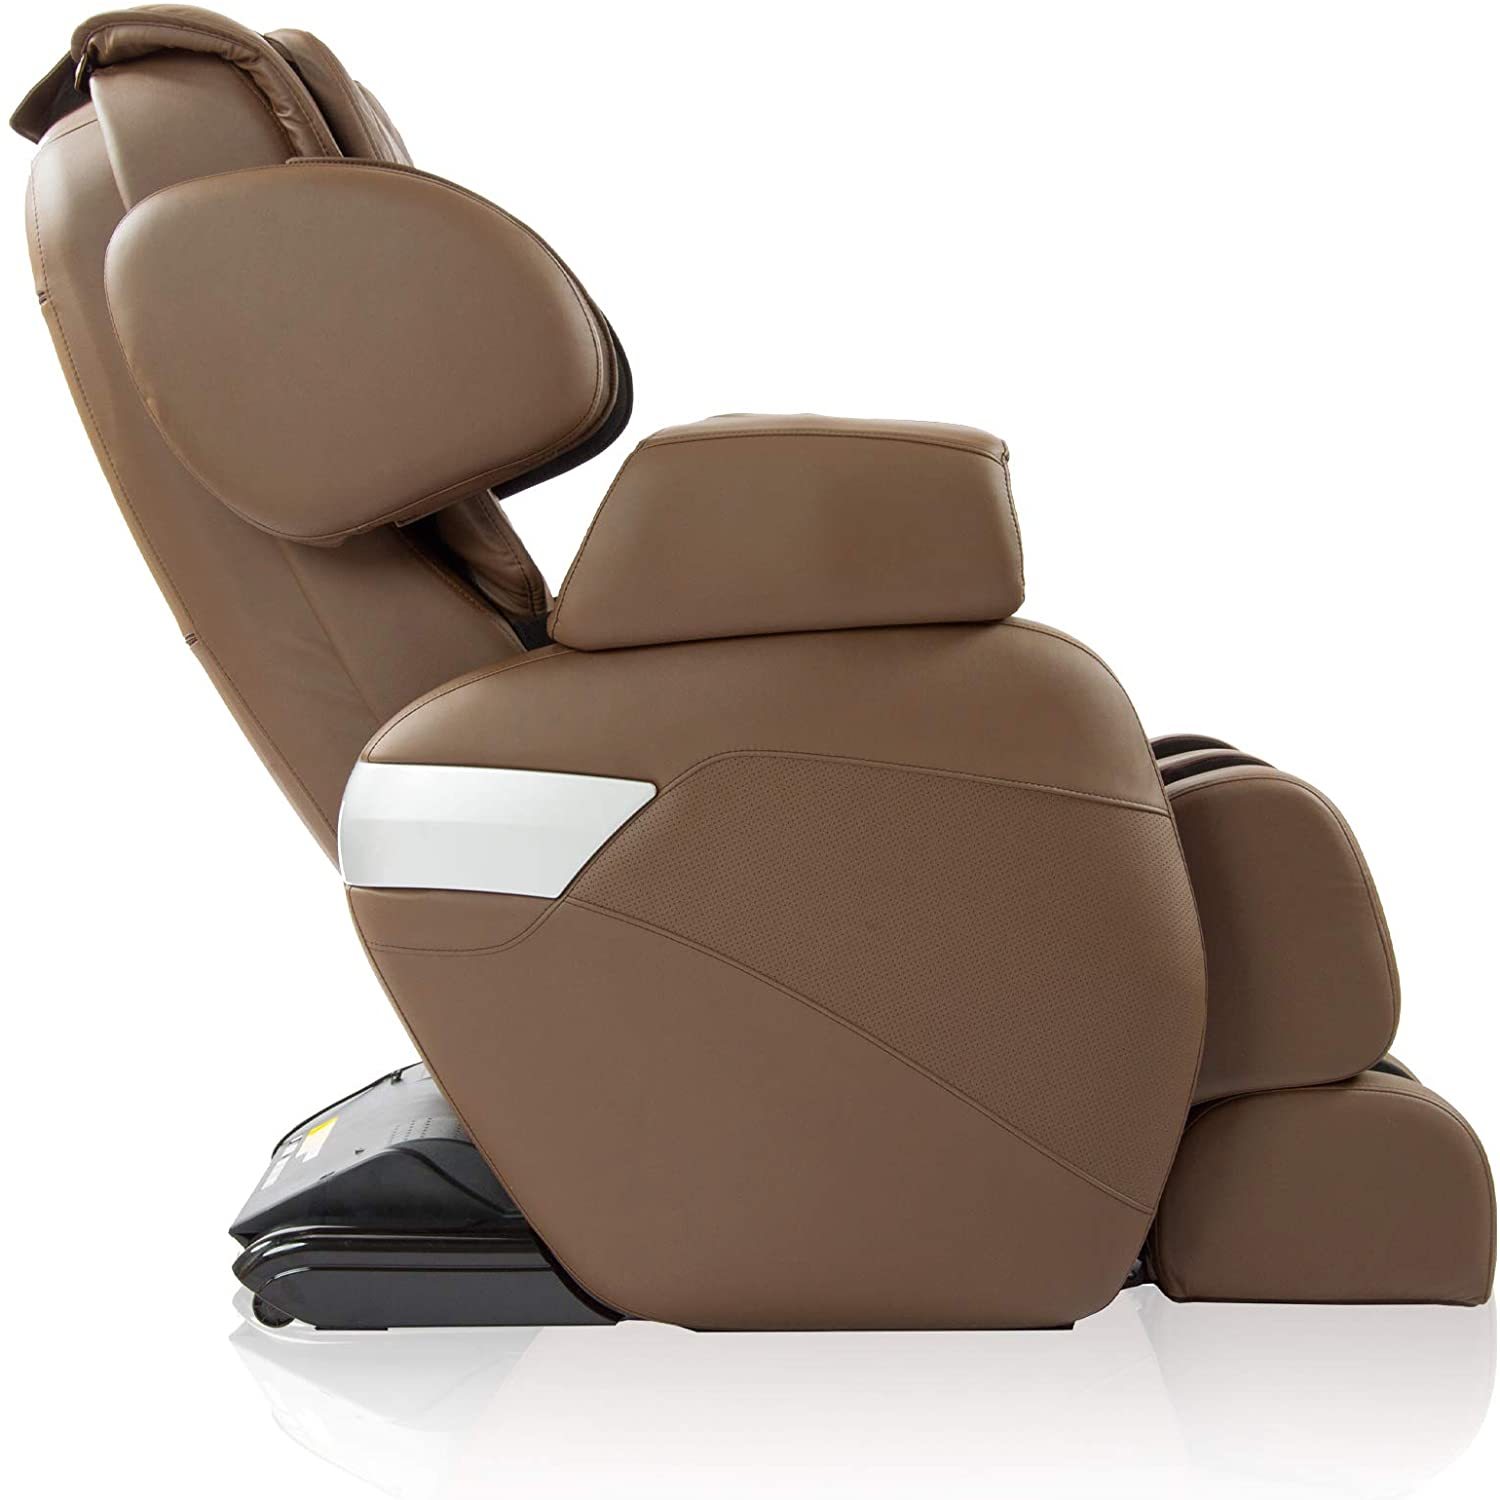 Relaxonchair [mk Ii Plus] Full Body Zero Gravity Shiatsu Massage Chair